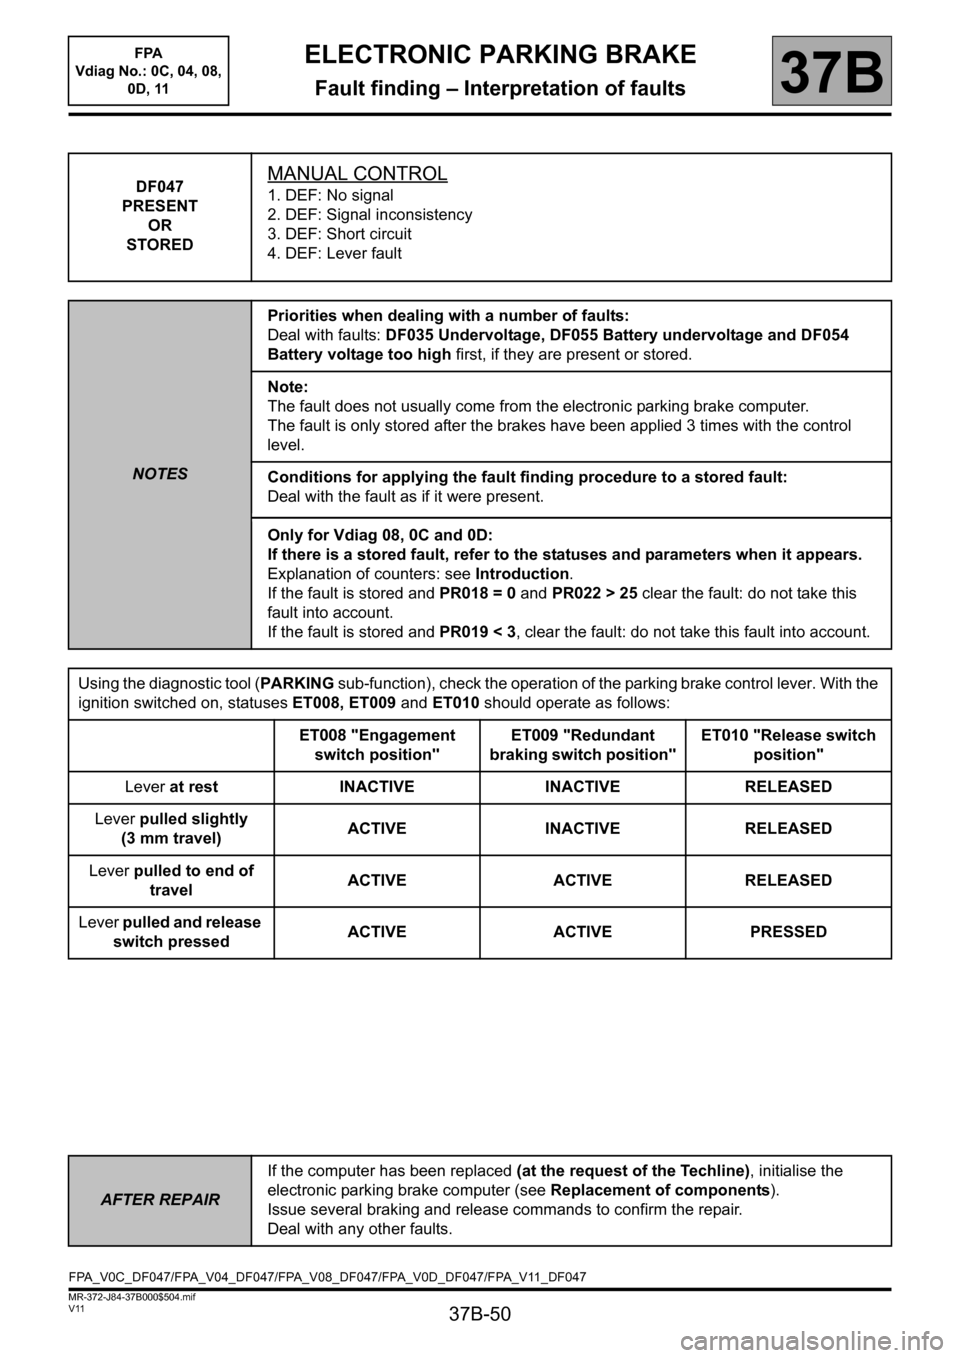 RENAULT SCENIC 2013 J95 / 3.G Electronic Parking Brake Workshop Manual 37B-50
MR-372-J84-37B000$504.mif
V11
ELECTRONIC PARKING BRAKE
Fault finding – Interpretation of faults
FPA  
Vdiag No.: 0C, 04, 08, 
0D, 11
37B
DF047
PRESENT
OR
STOREDMANUAL CONTROL
1. DEF: No signa